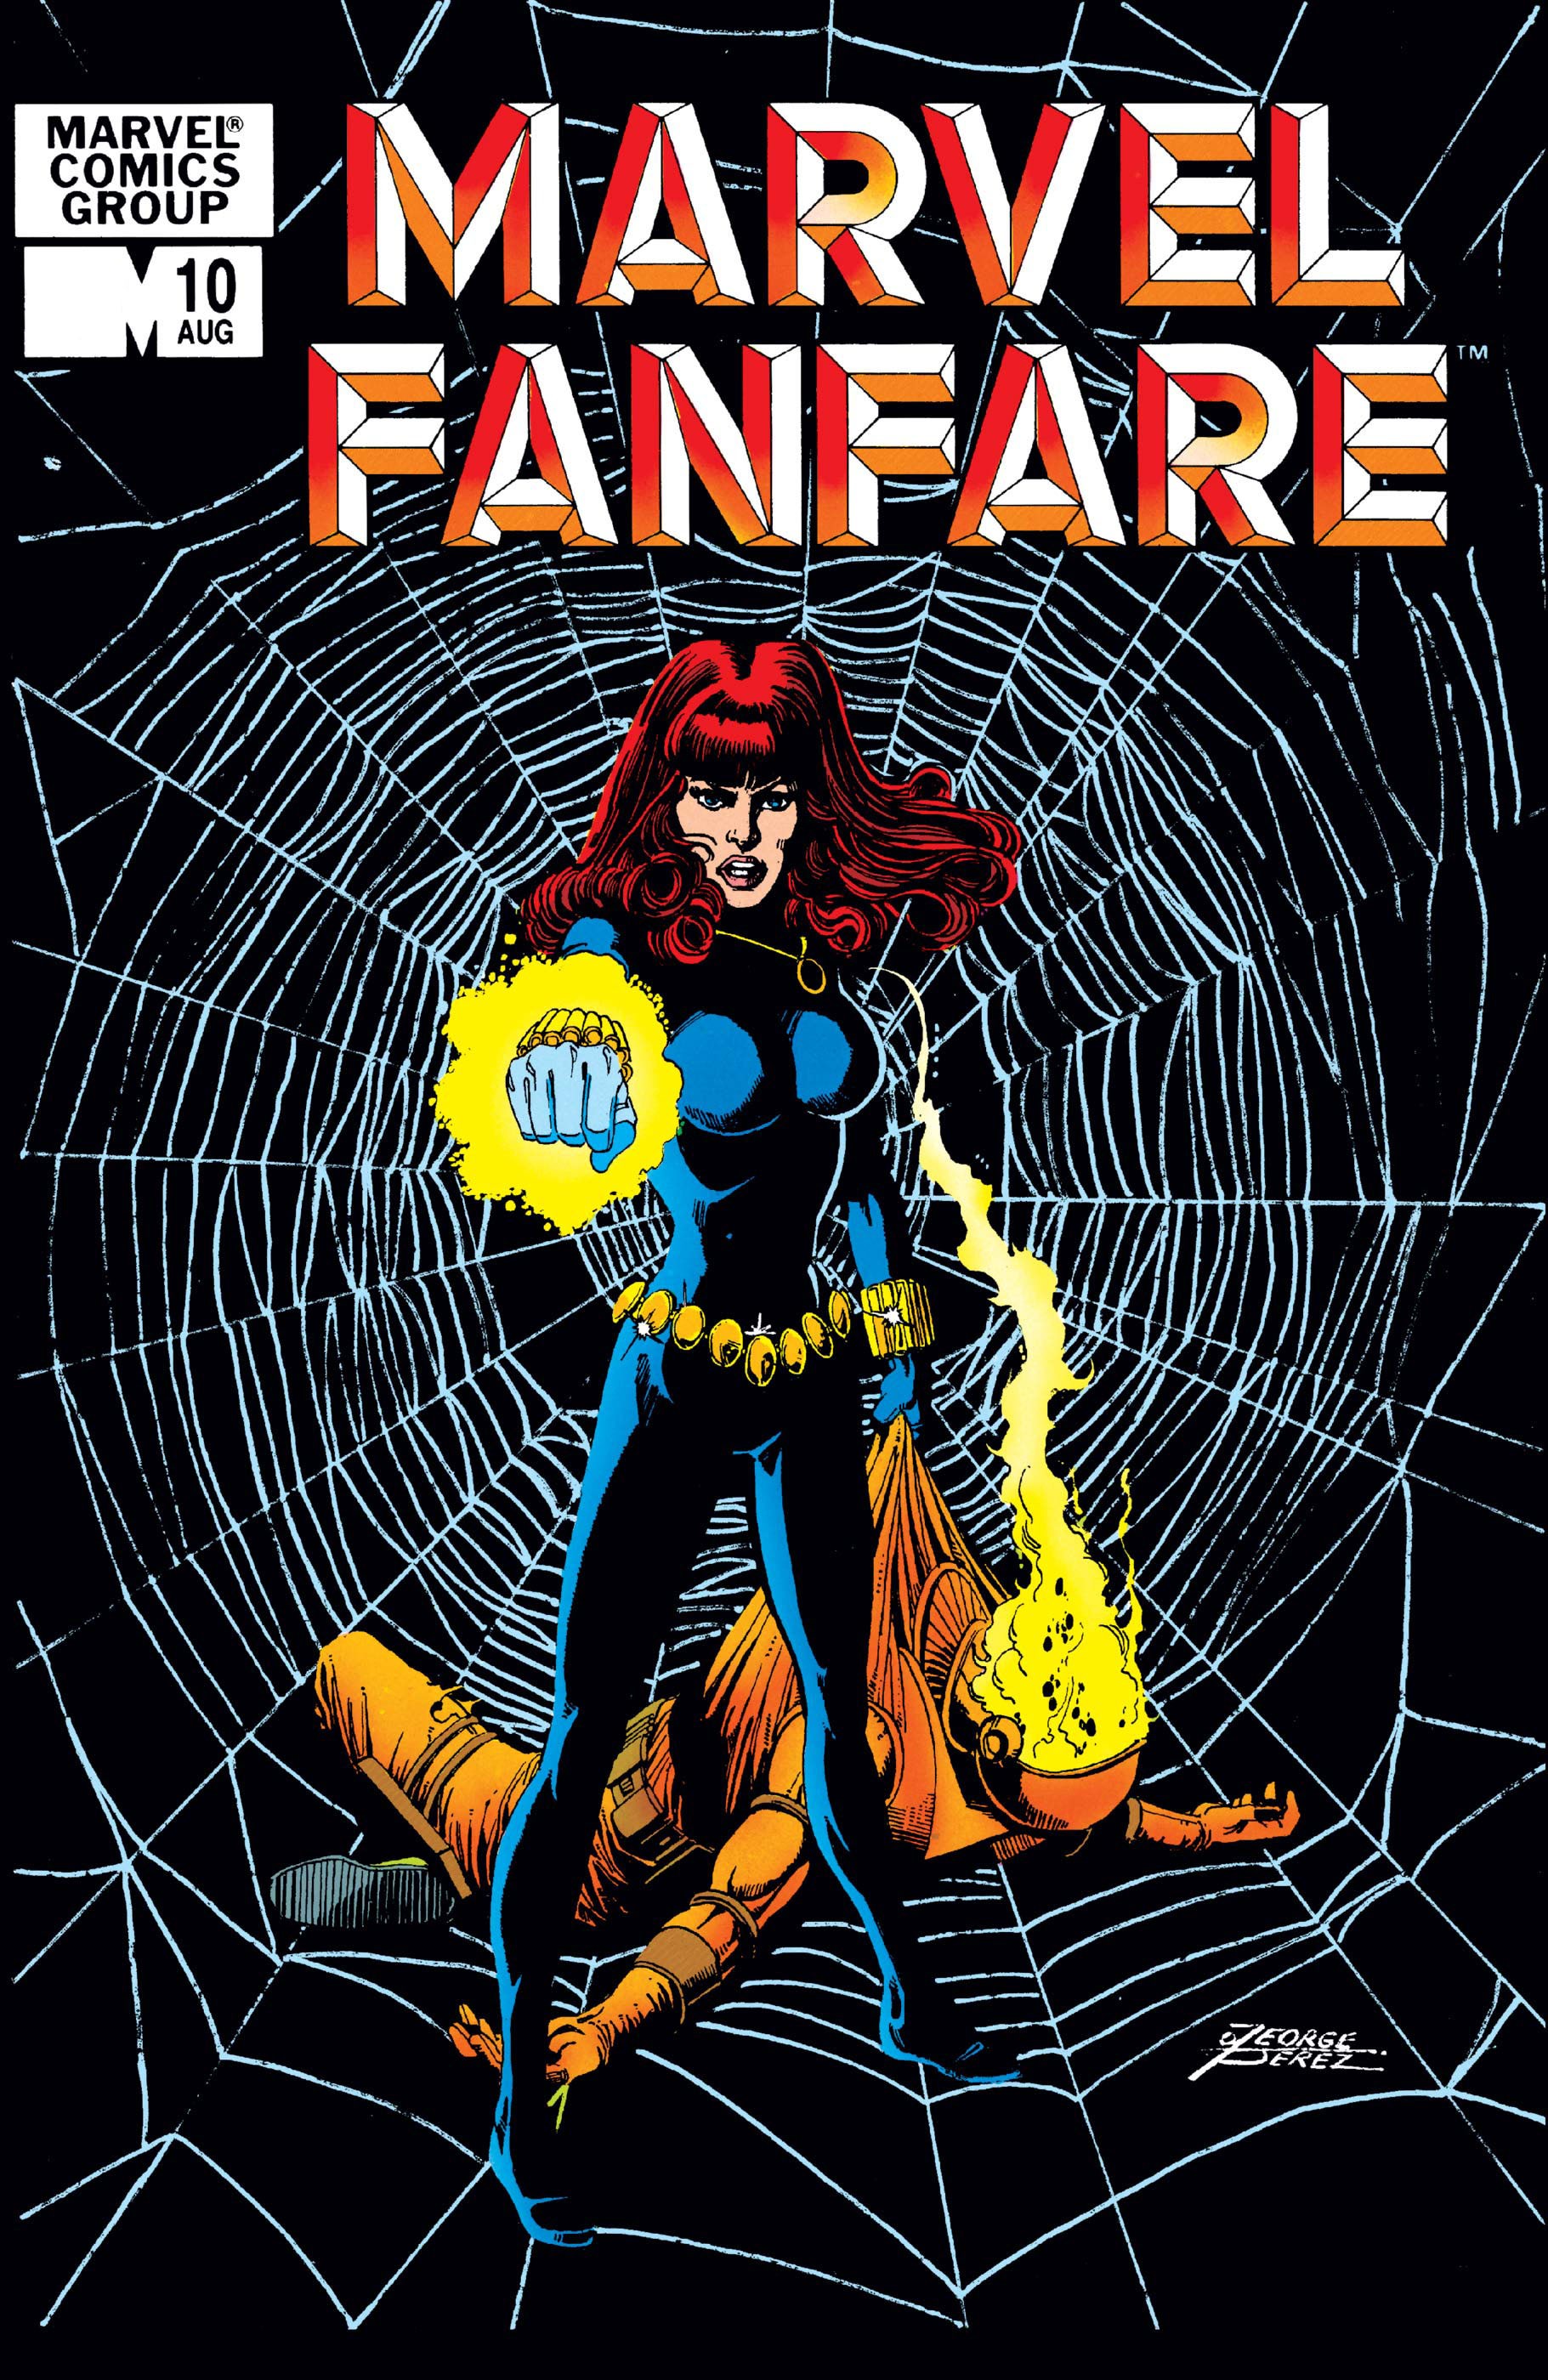 Marvel Fanfare (1982) #10